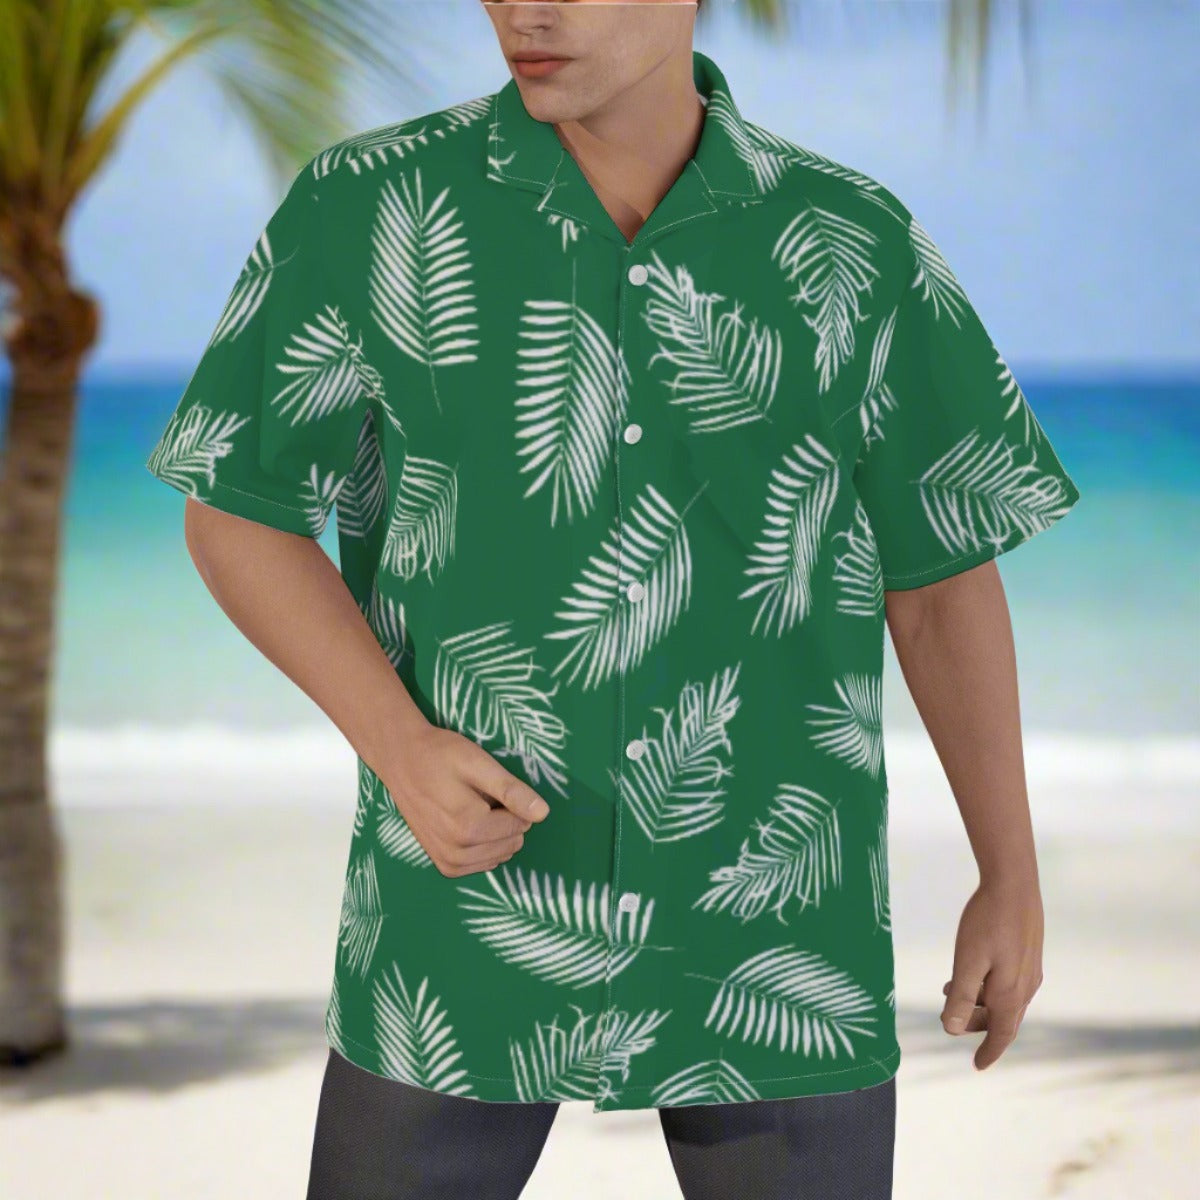 Classic Men's Green Leaf Resort Shirt, 99% Cotton Men's Shirt